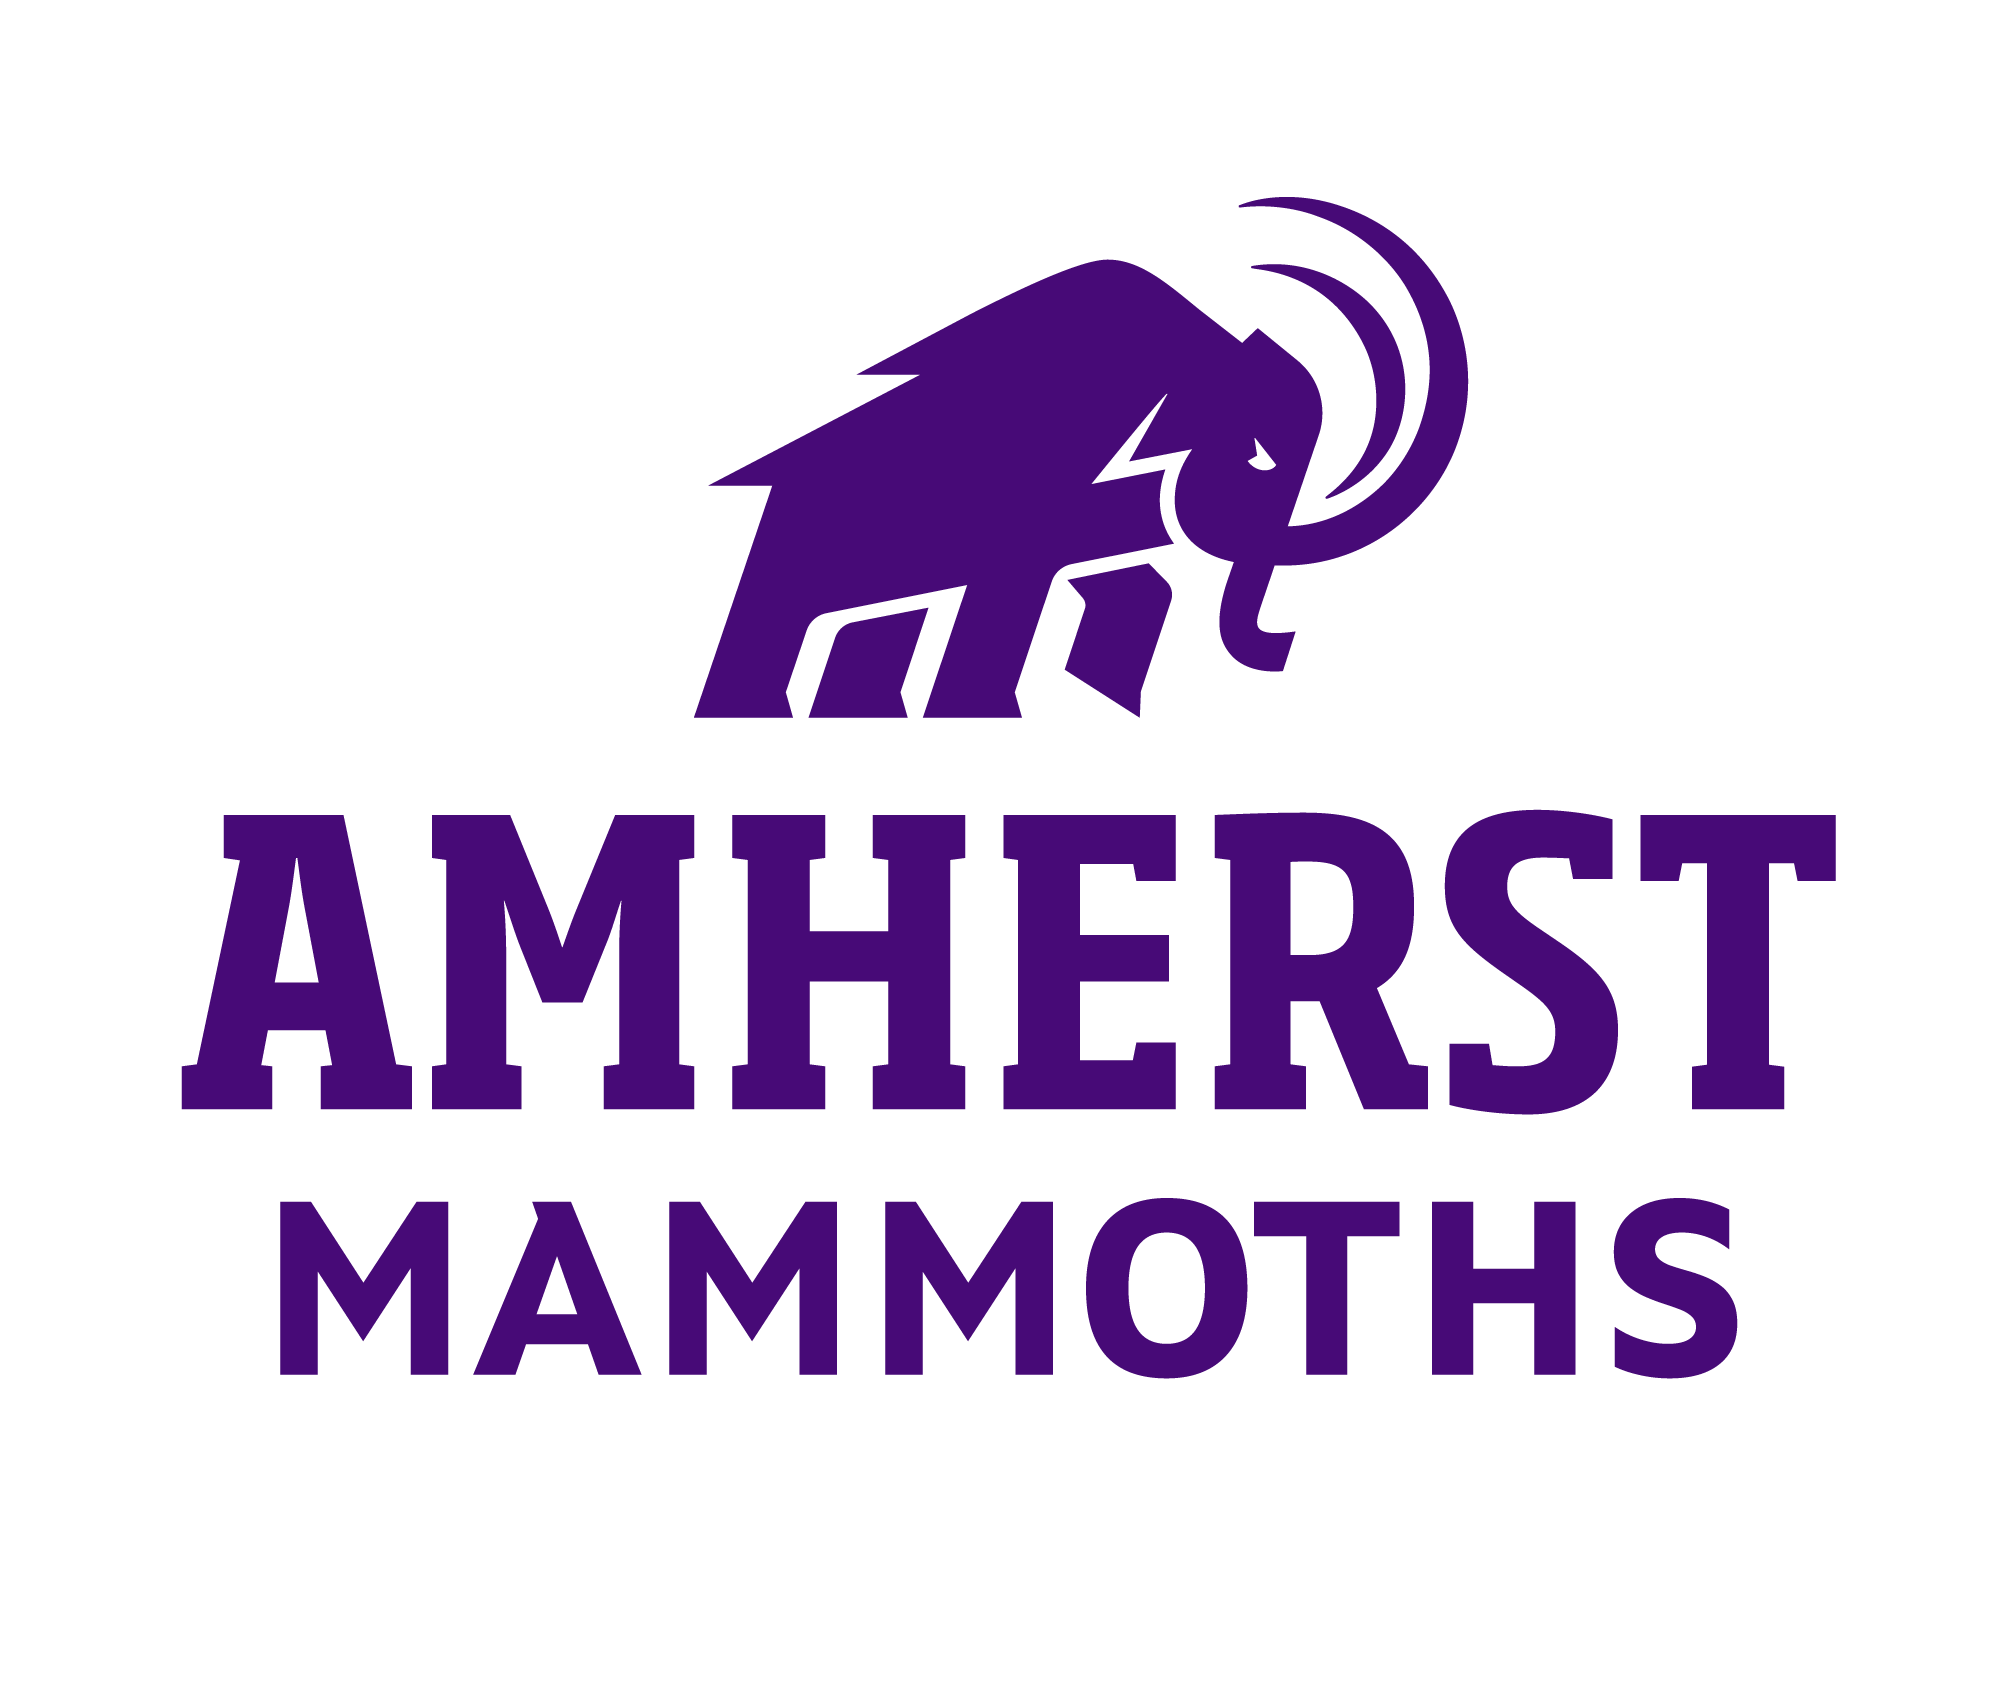 Mammoth logo with caption Amherst Mammoths